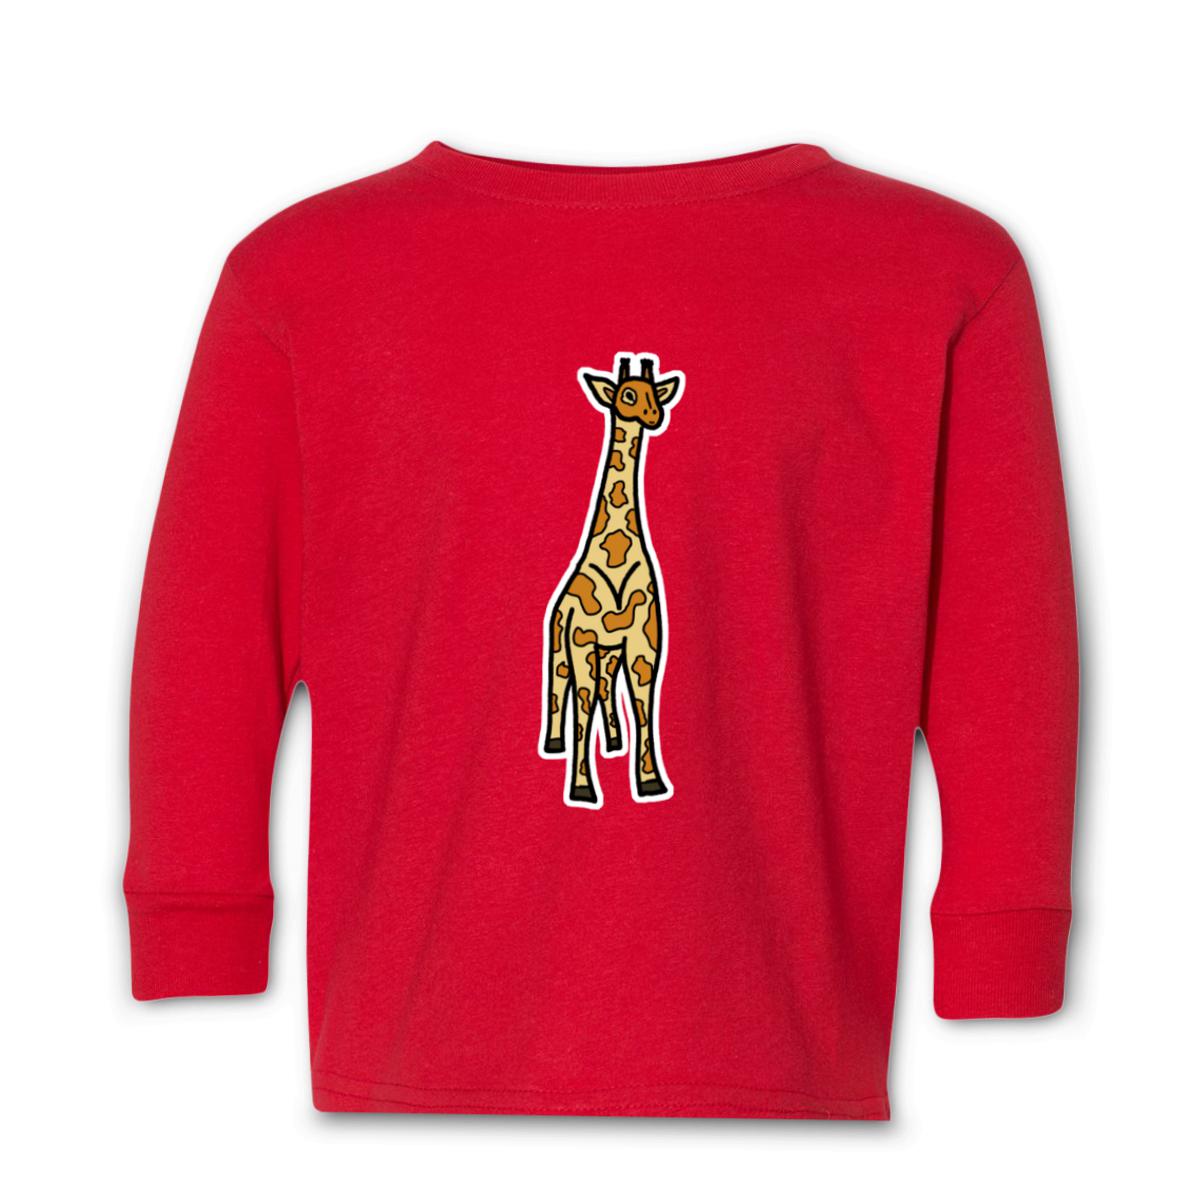 Toy Giraffe Toddler Long Sleeve Tee 2T red